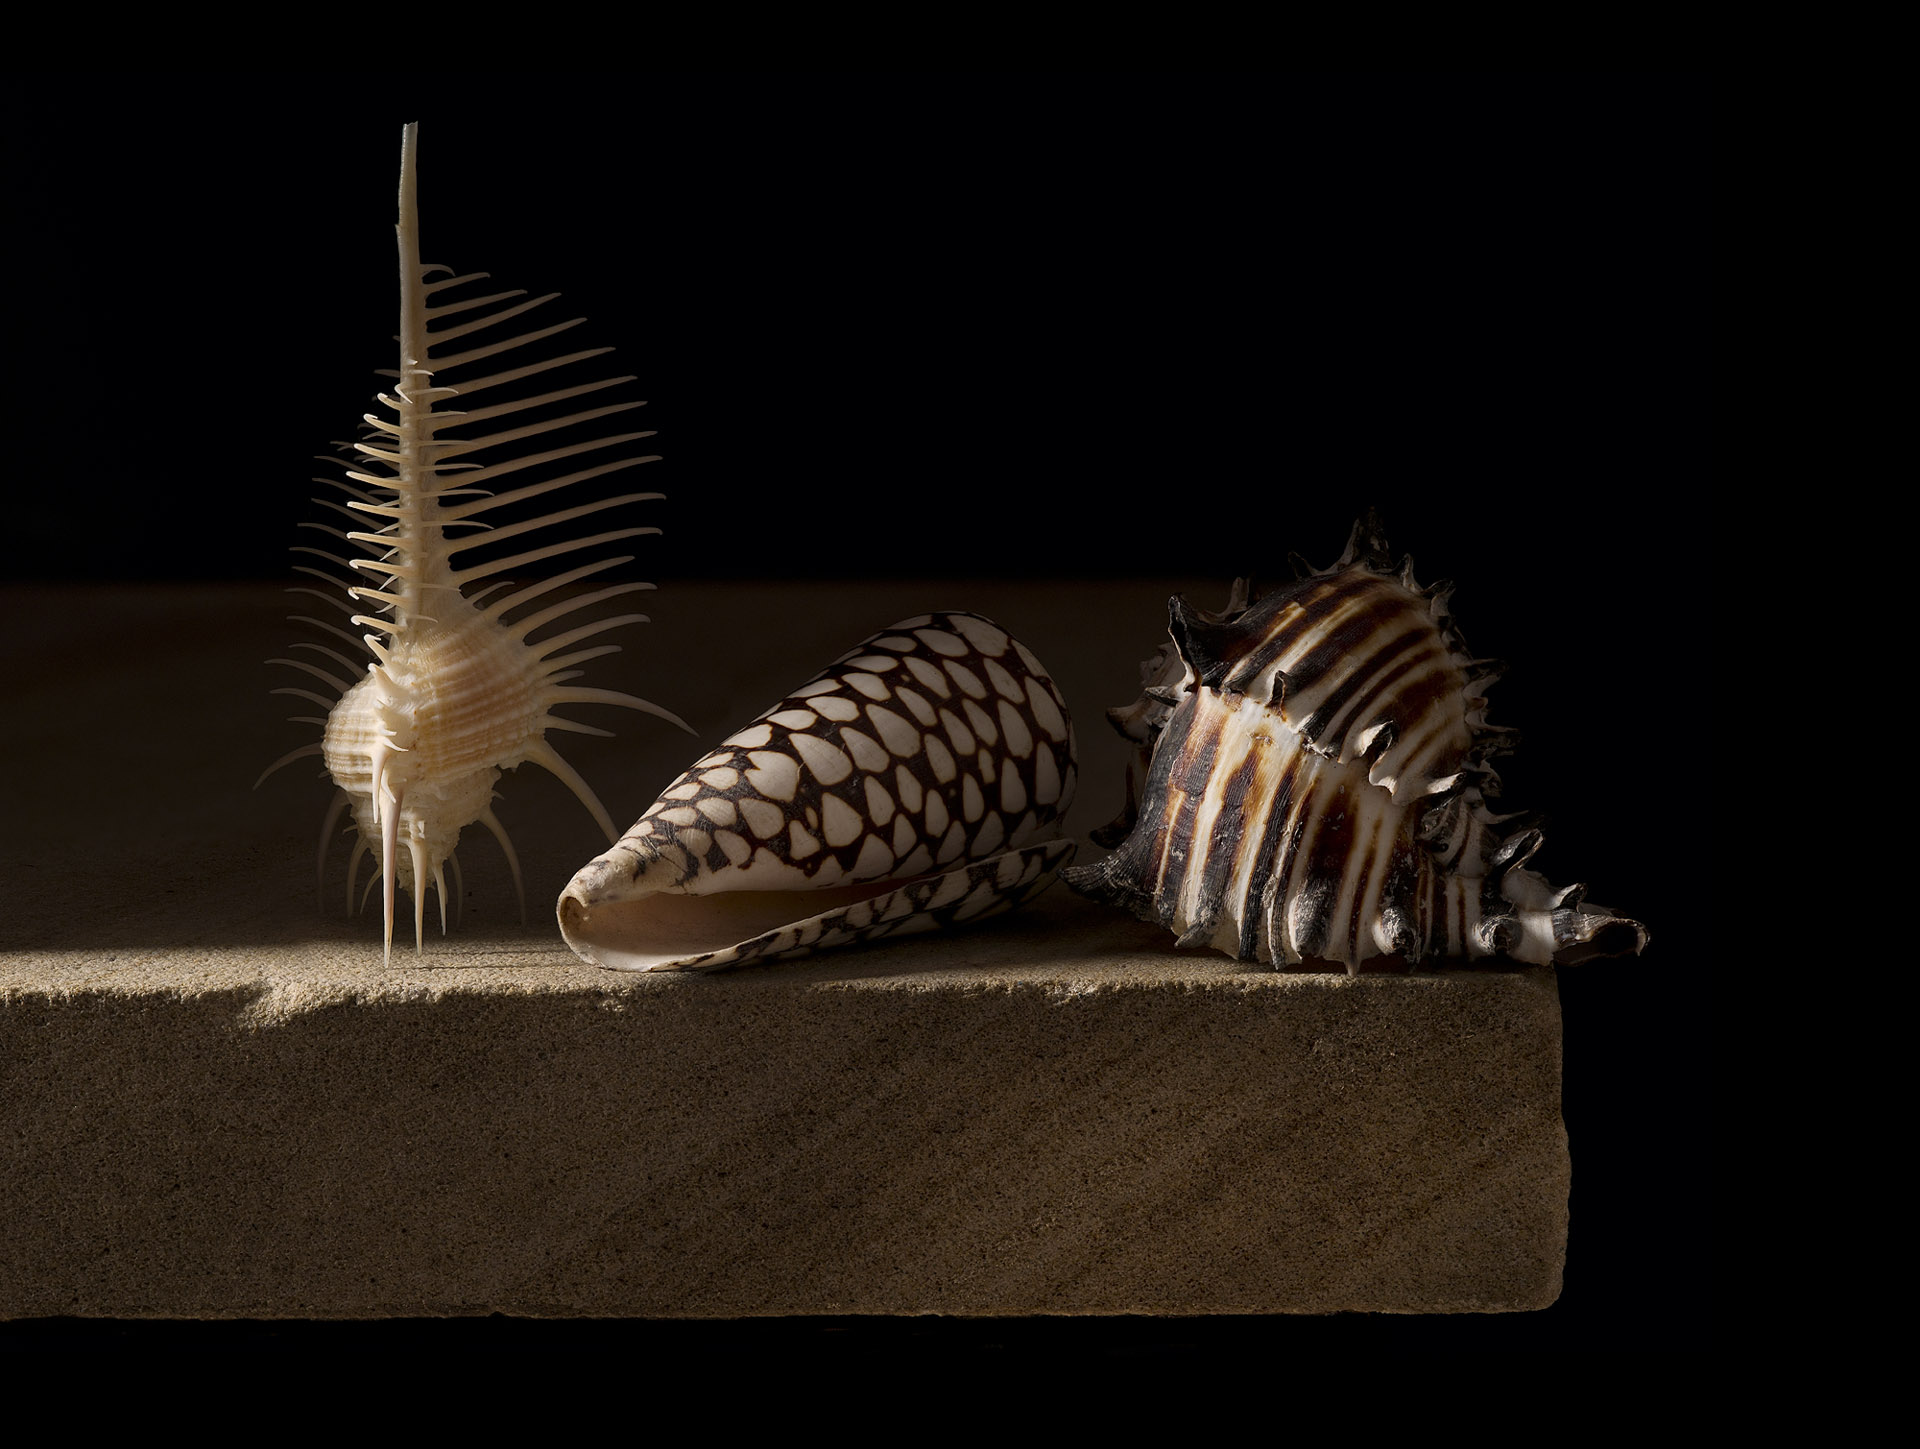 Still life with three shells